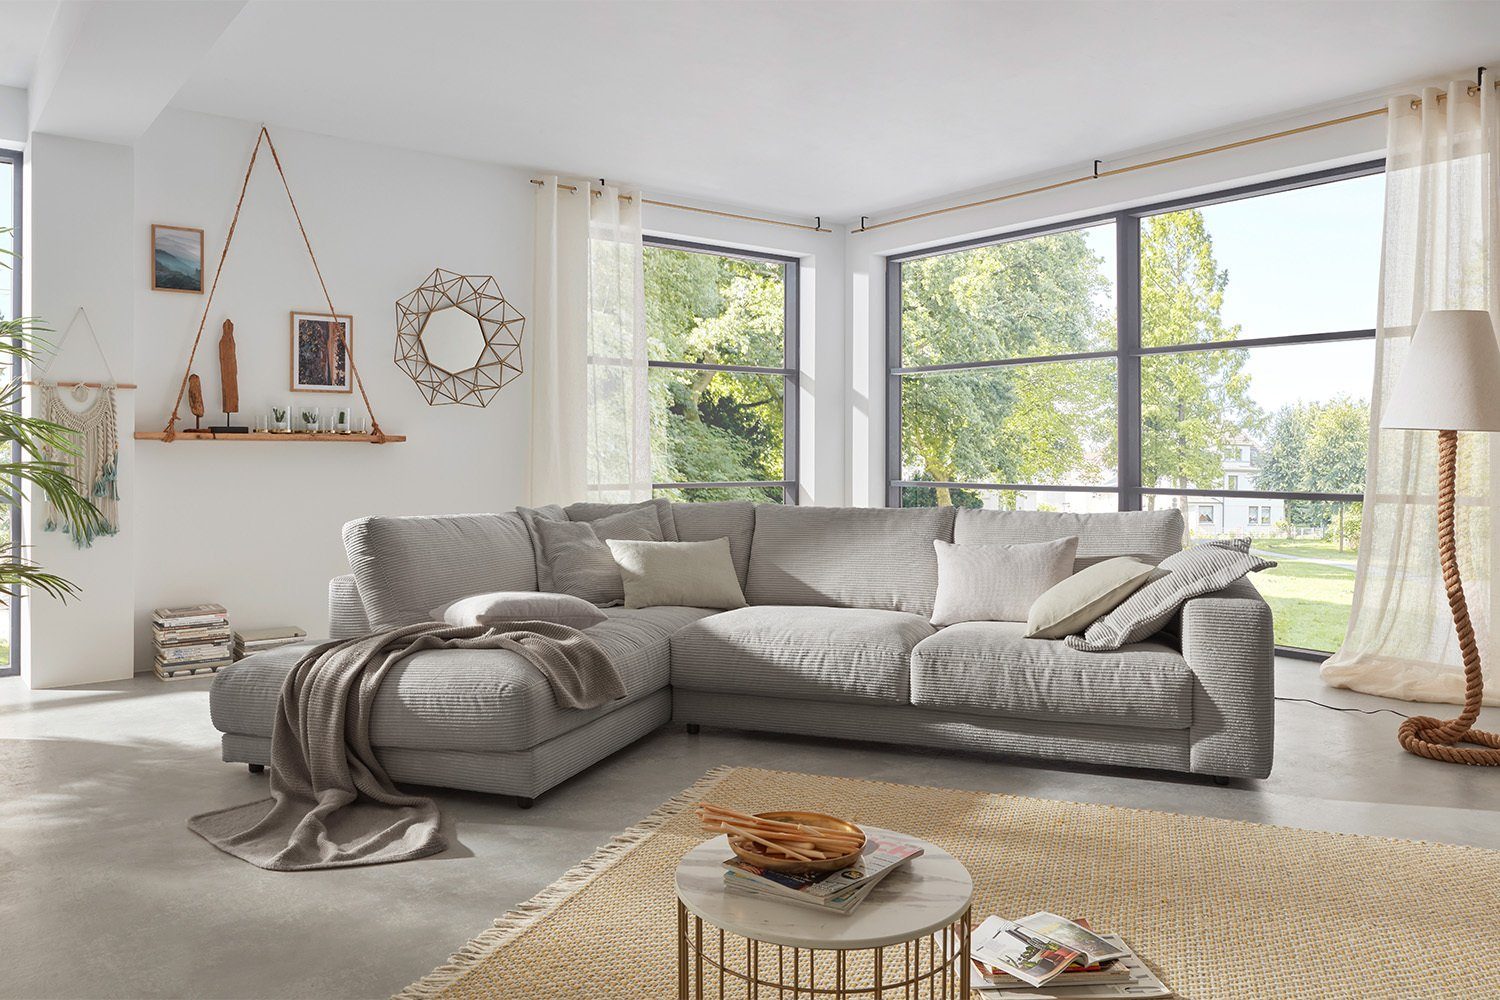 KAWOLA Ecksofa MADELINE, Sofa Cord, Recamiere rechts od. links, versch. Farben grau